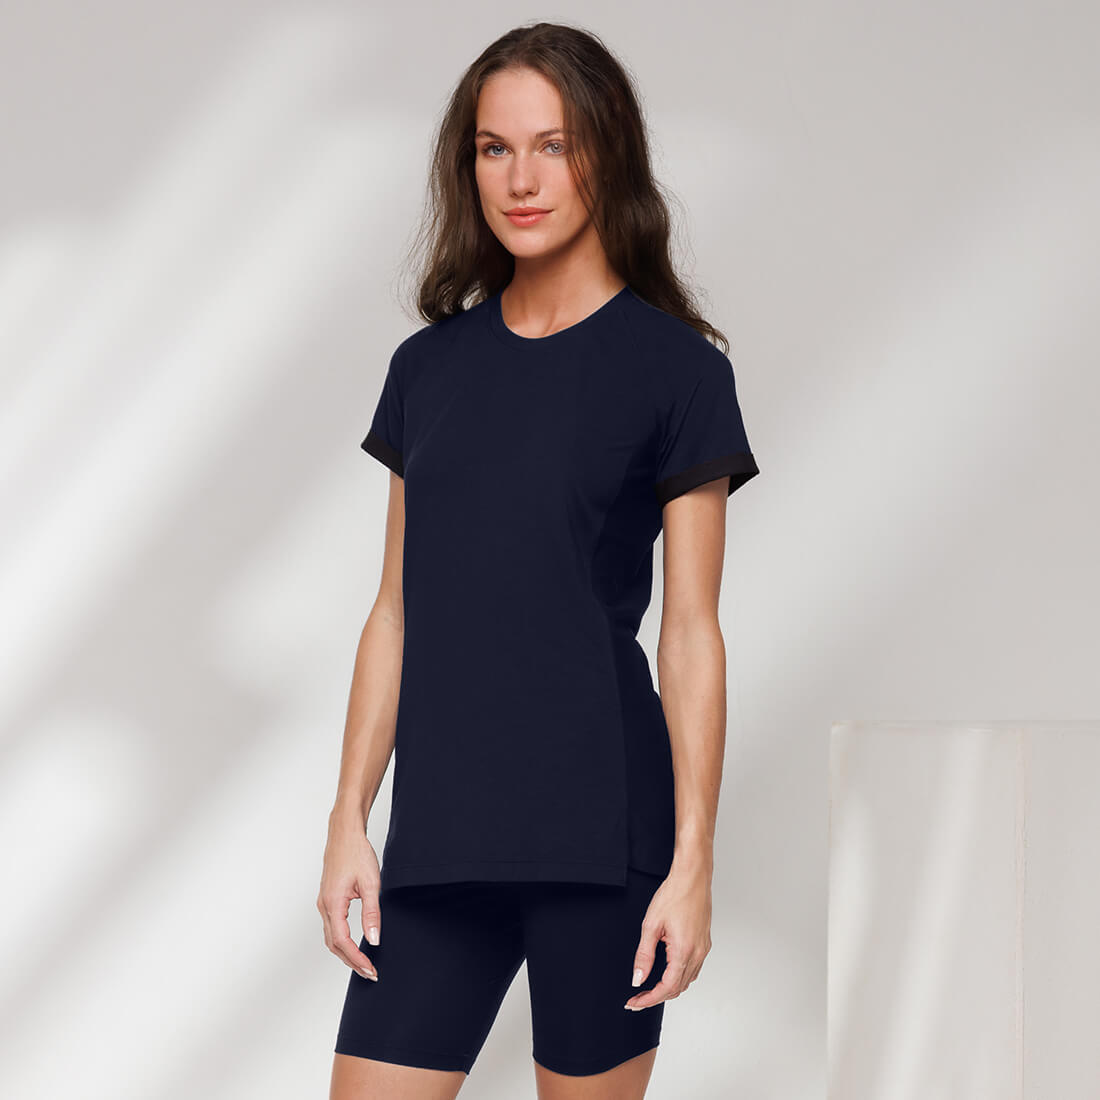 Muscle recovery  sleep t-shirt women || Navy